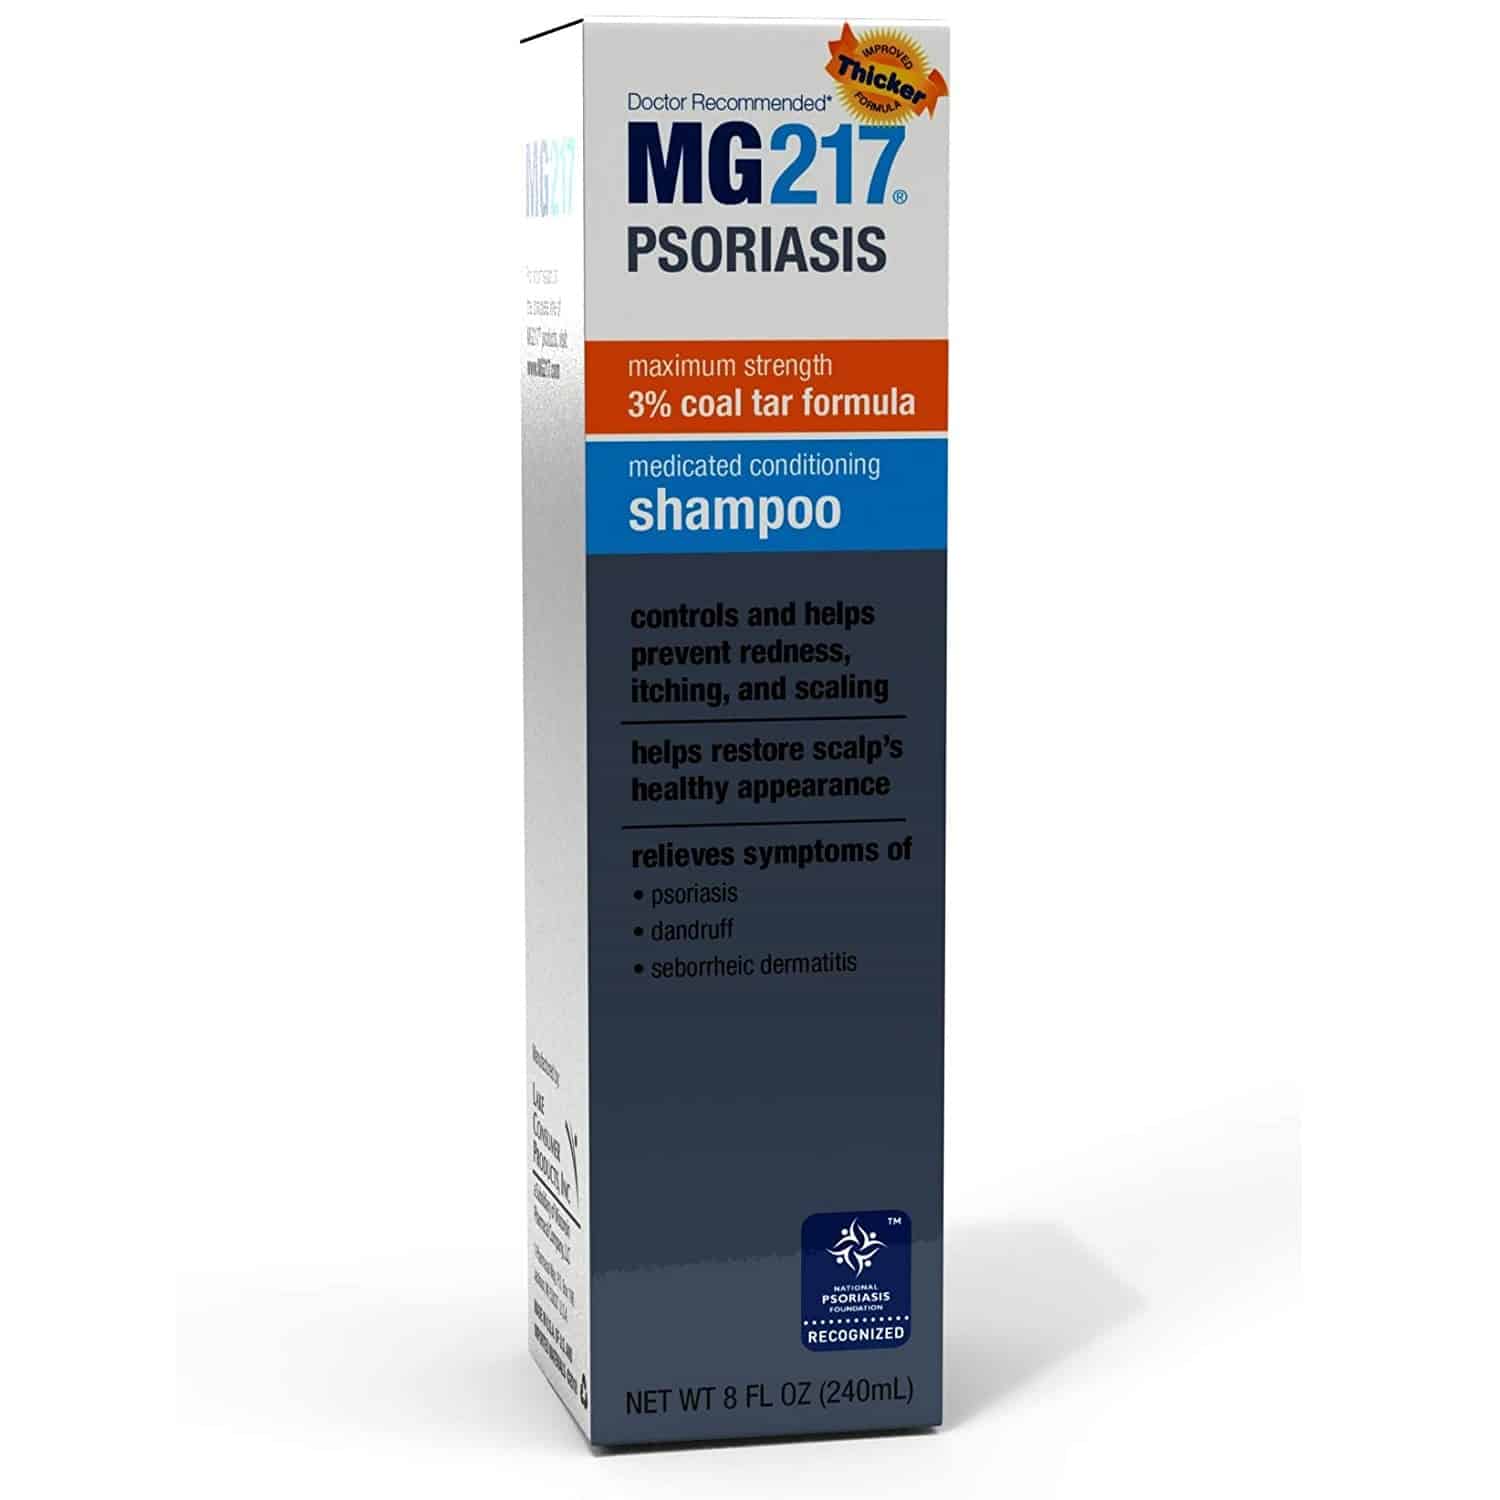 mg217 psoriasis medicated conditioning 3 coal tar formula shampoo